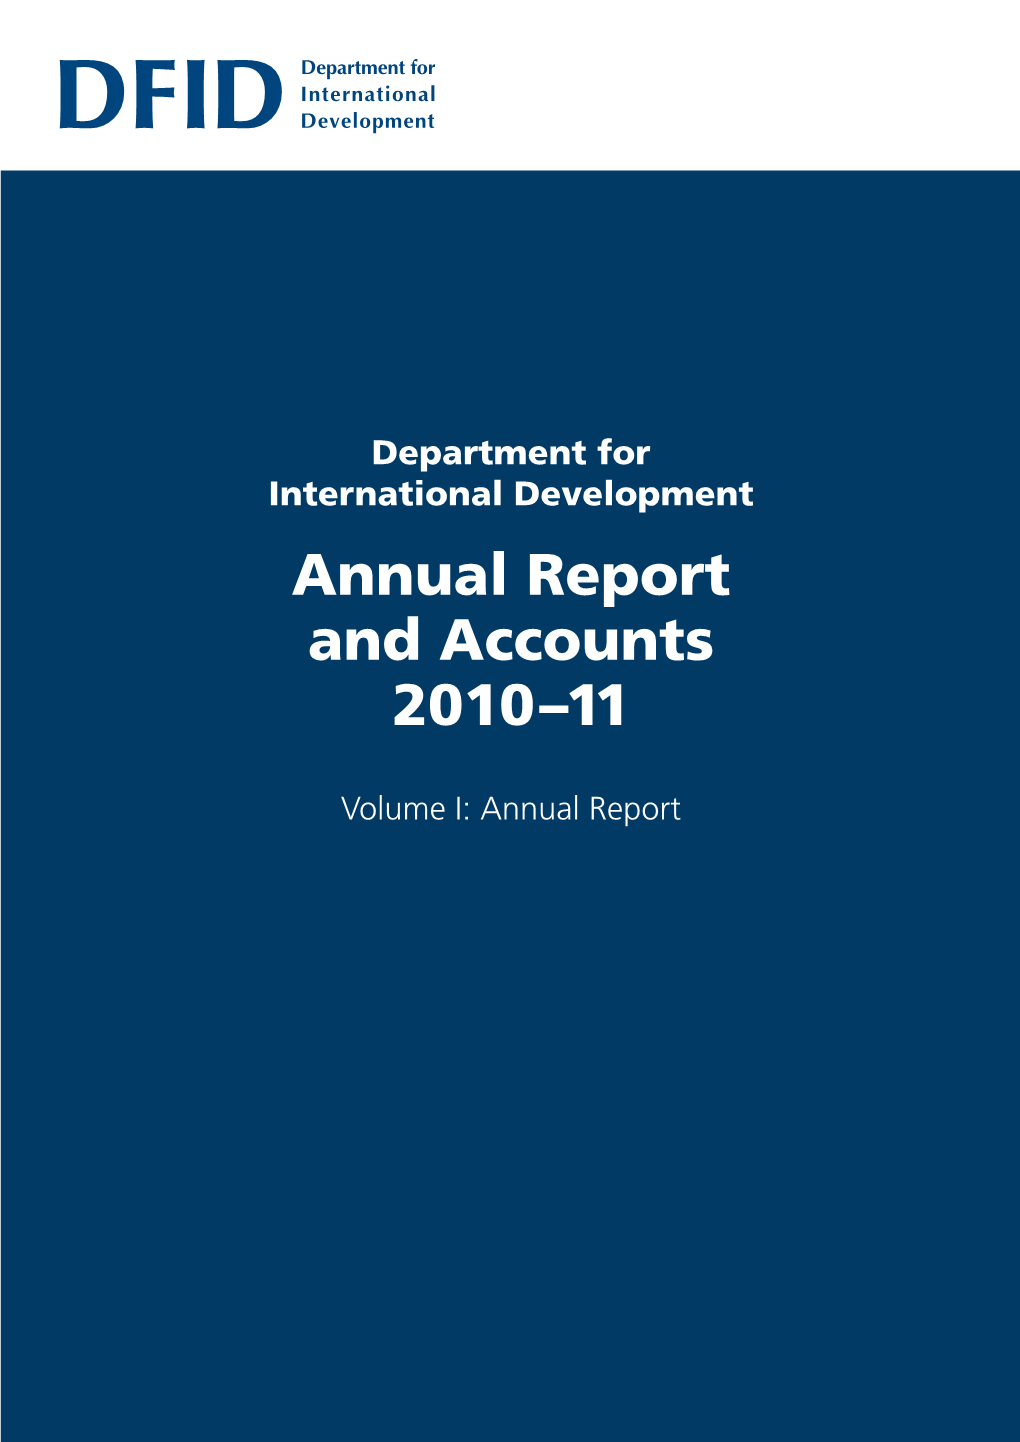 PDF | 4.91 MB | Annual Report 2011 Vol I